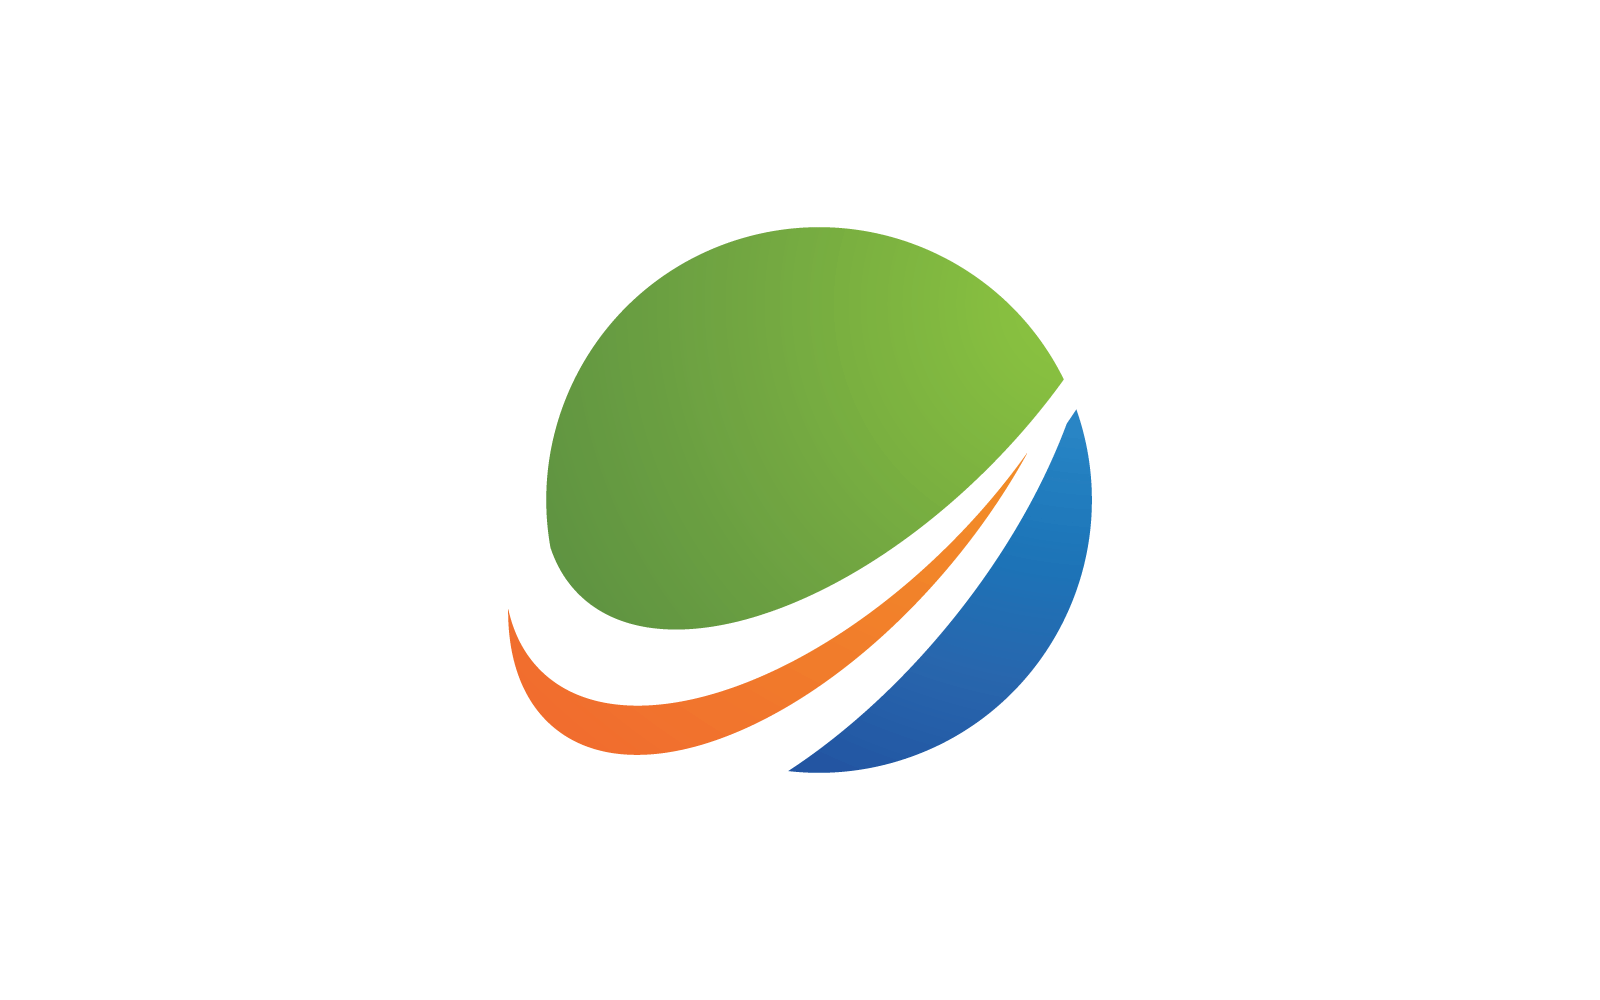 Mondiale technologie logo vector illustratie sjabloon